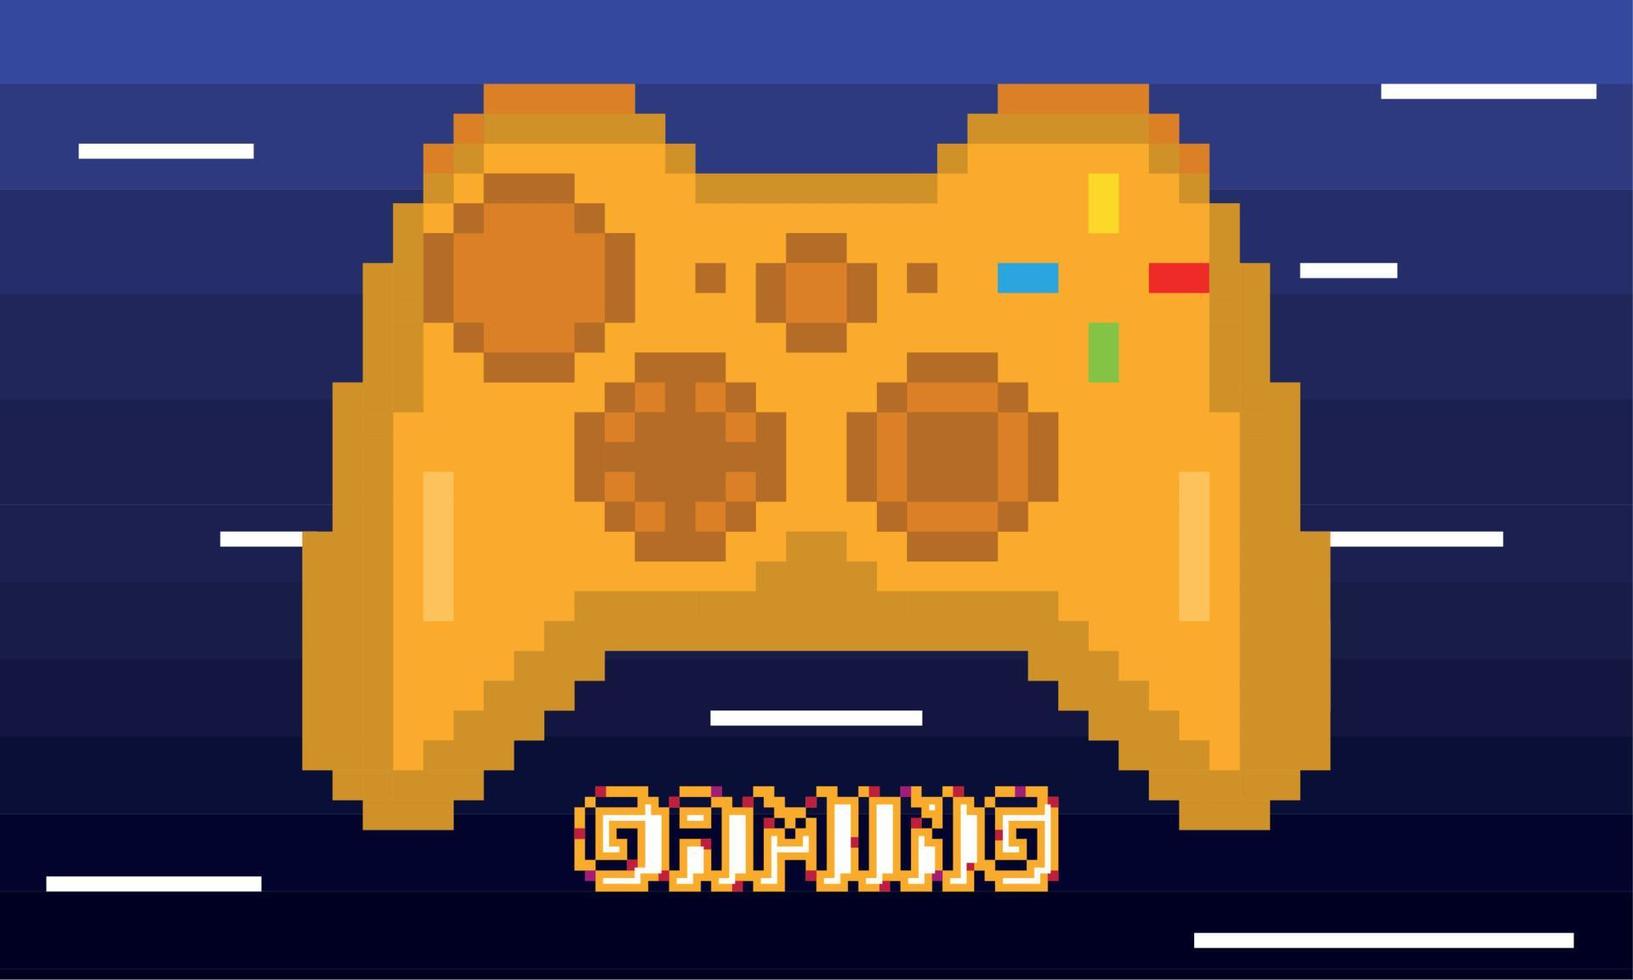 joystick pixelado edición dorada para juegos vector